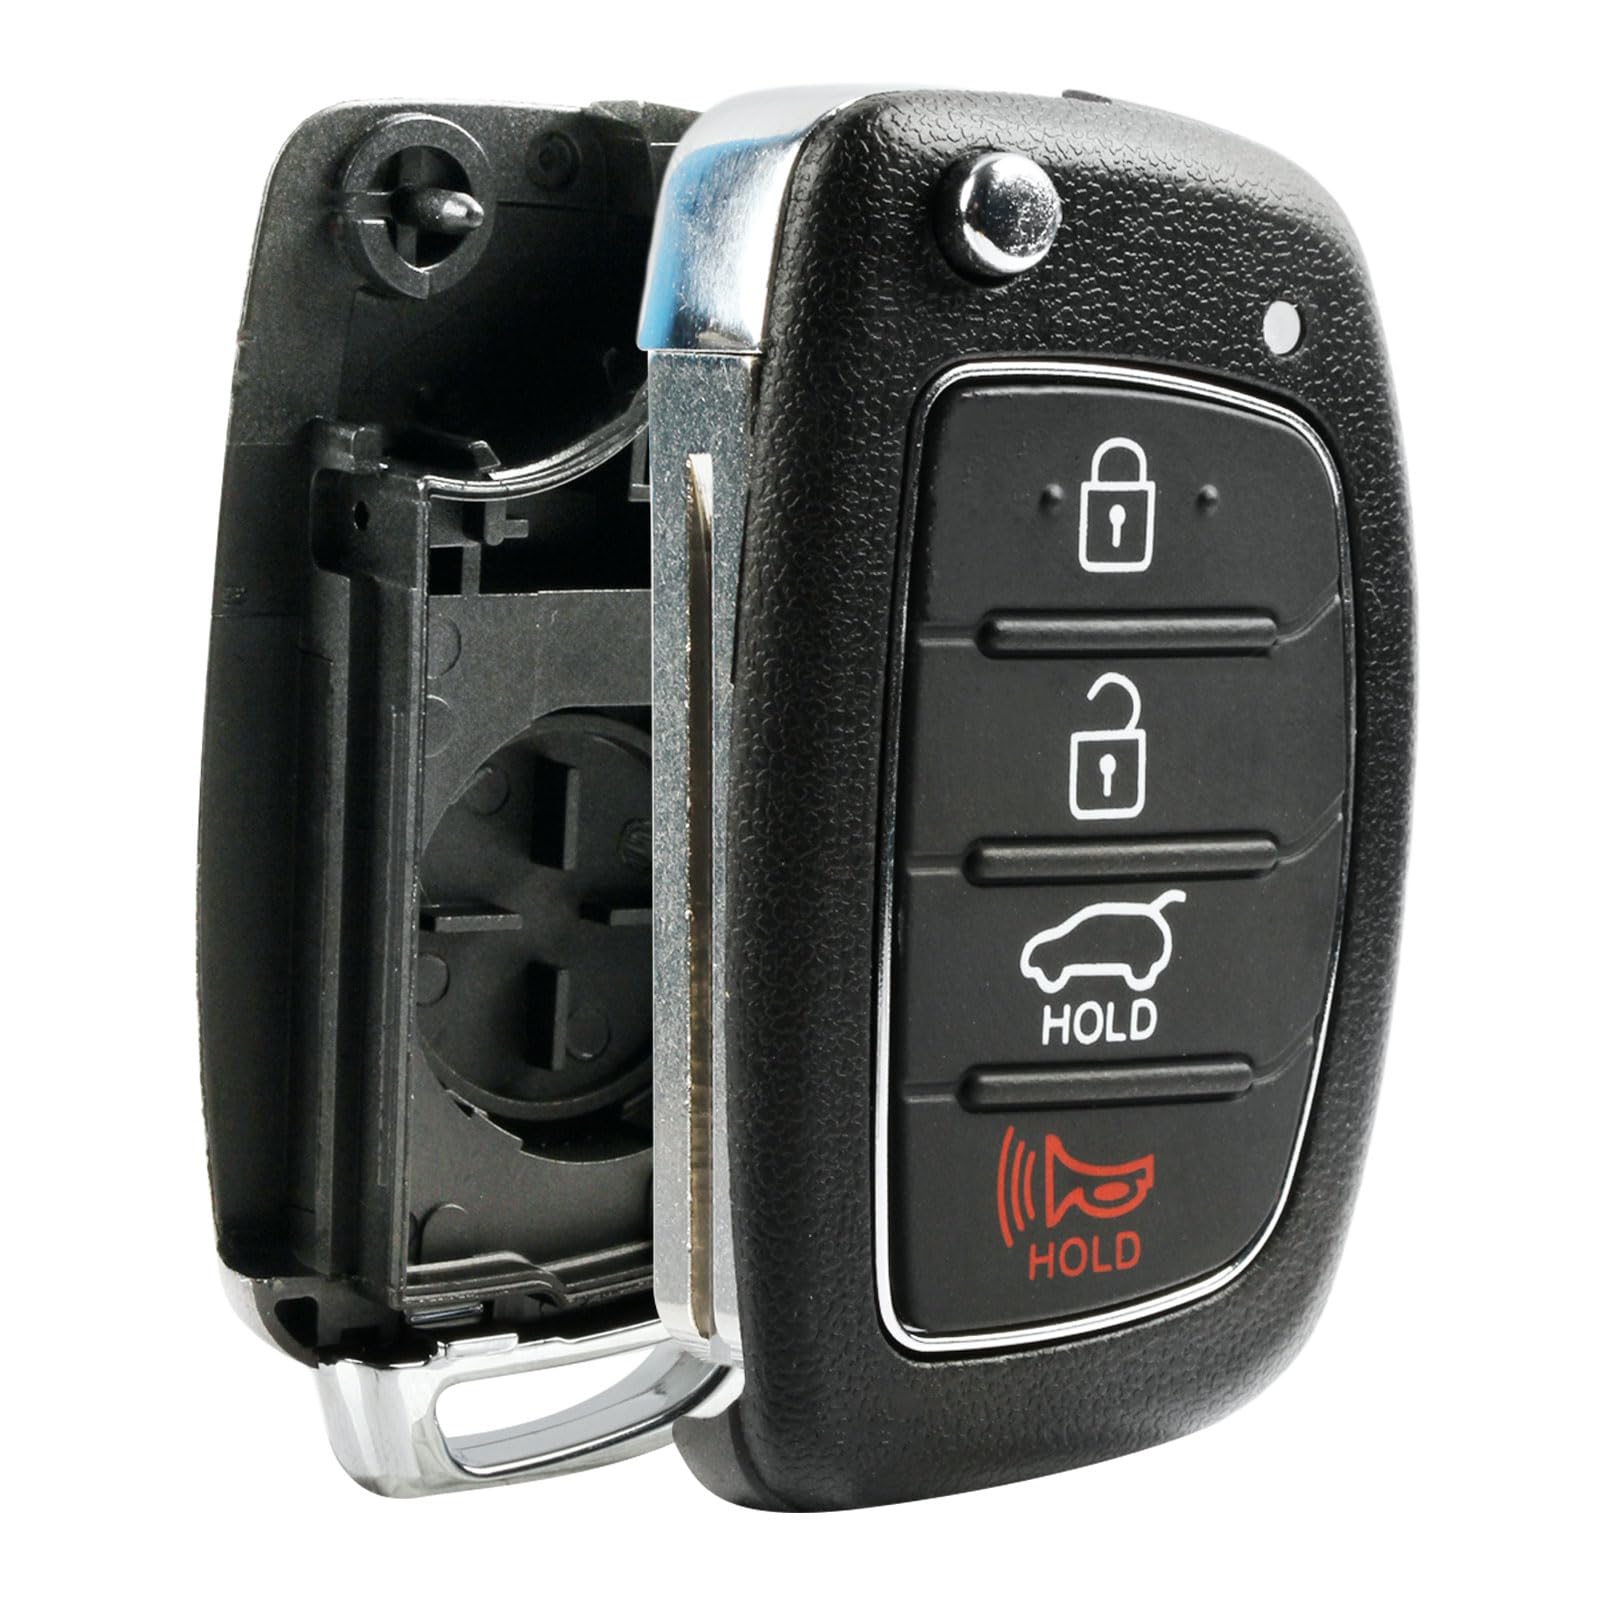 Case Shell fits 2013-2019 Hyundai Santa Fe Key Fob Keyless Entry Remote